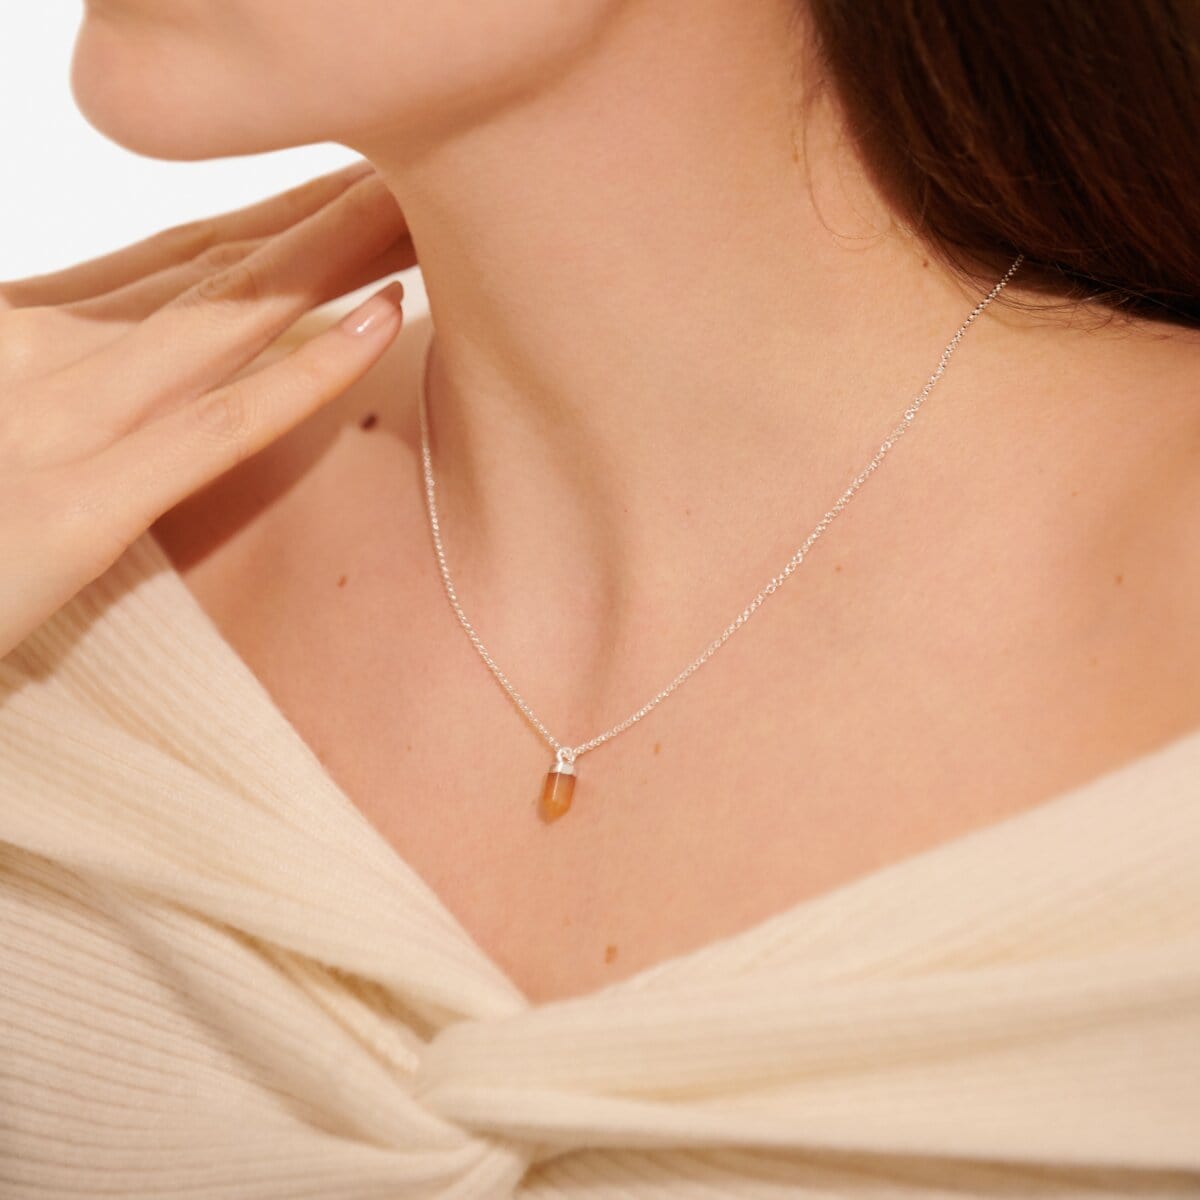 Joma Jewellery Bracelets Joma Jewellery Affirmation Necklace - A little Energy - Amber